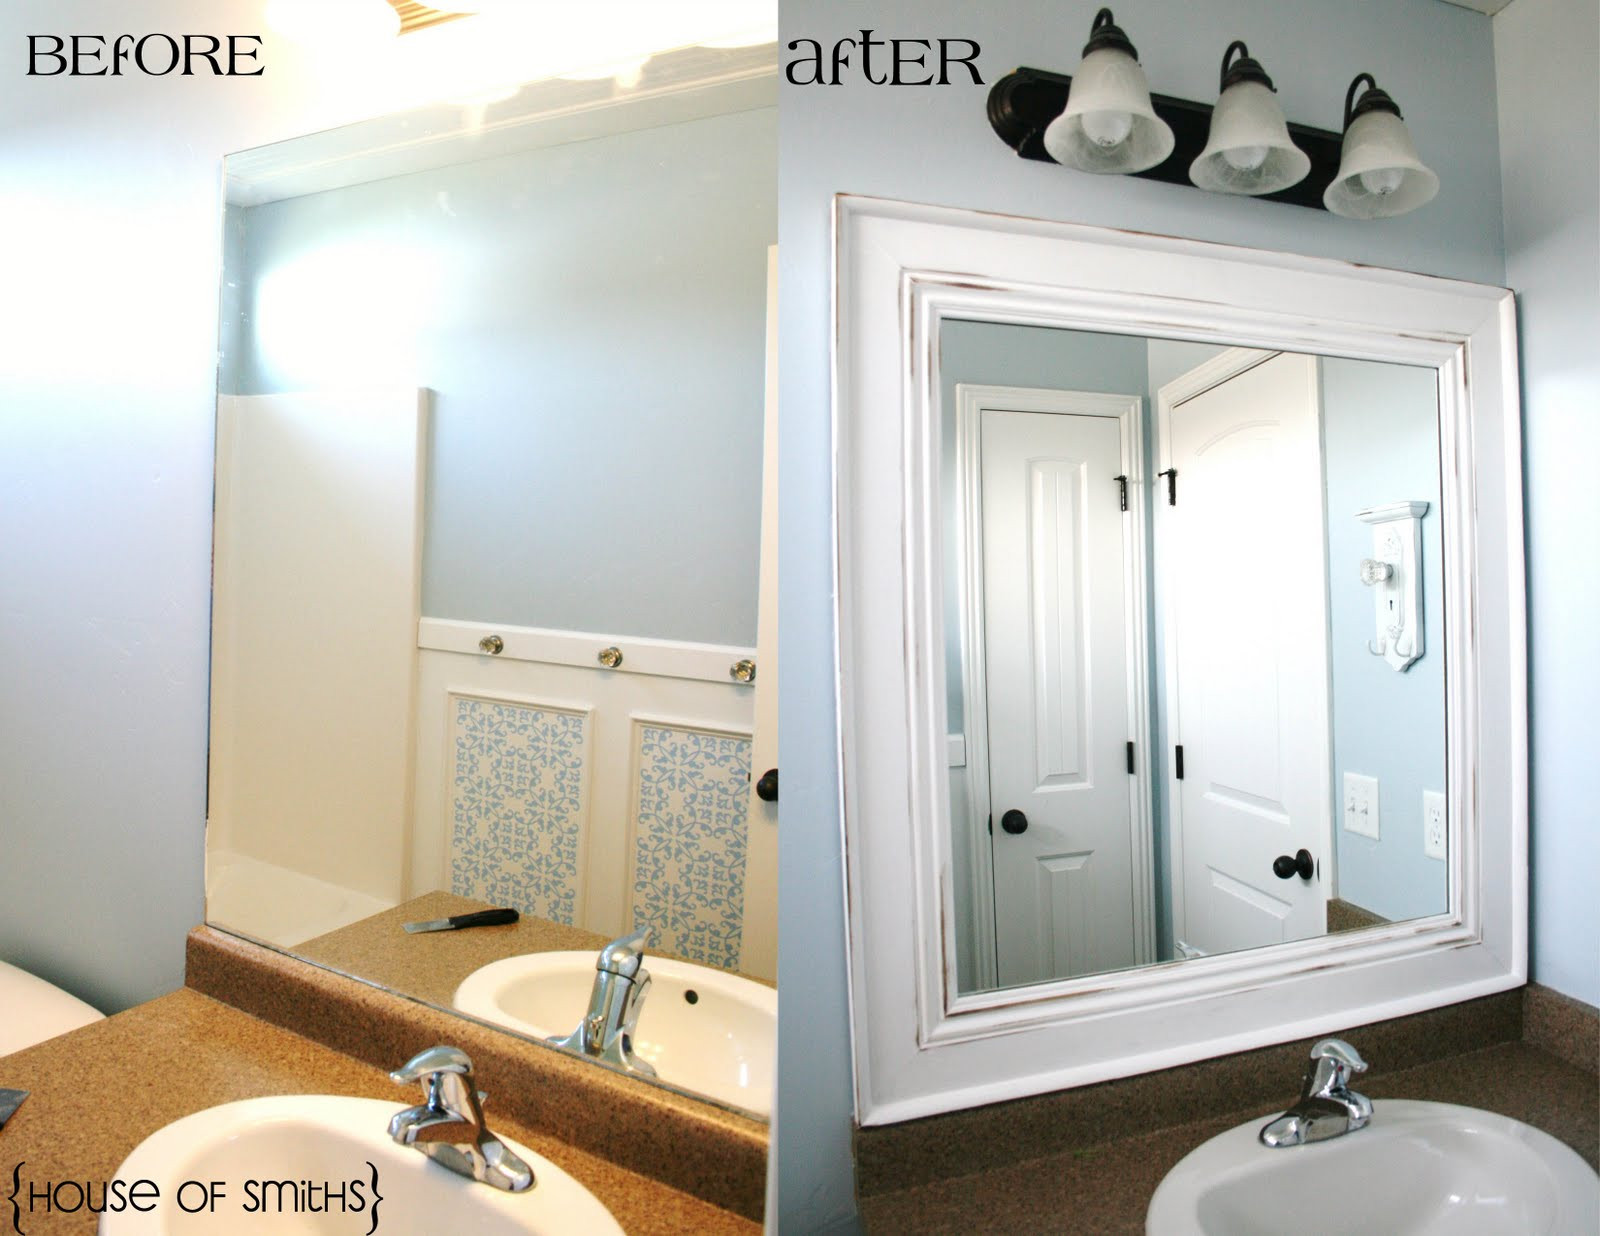 Best ideas about DIY Bathroom Mirror
. Save or Pin DIY Framed Mirror Tutorial Now.